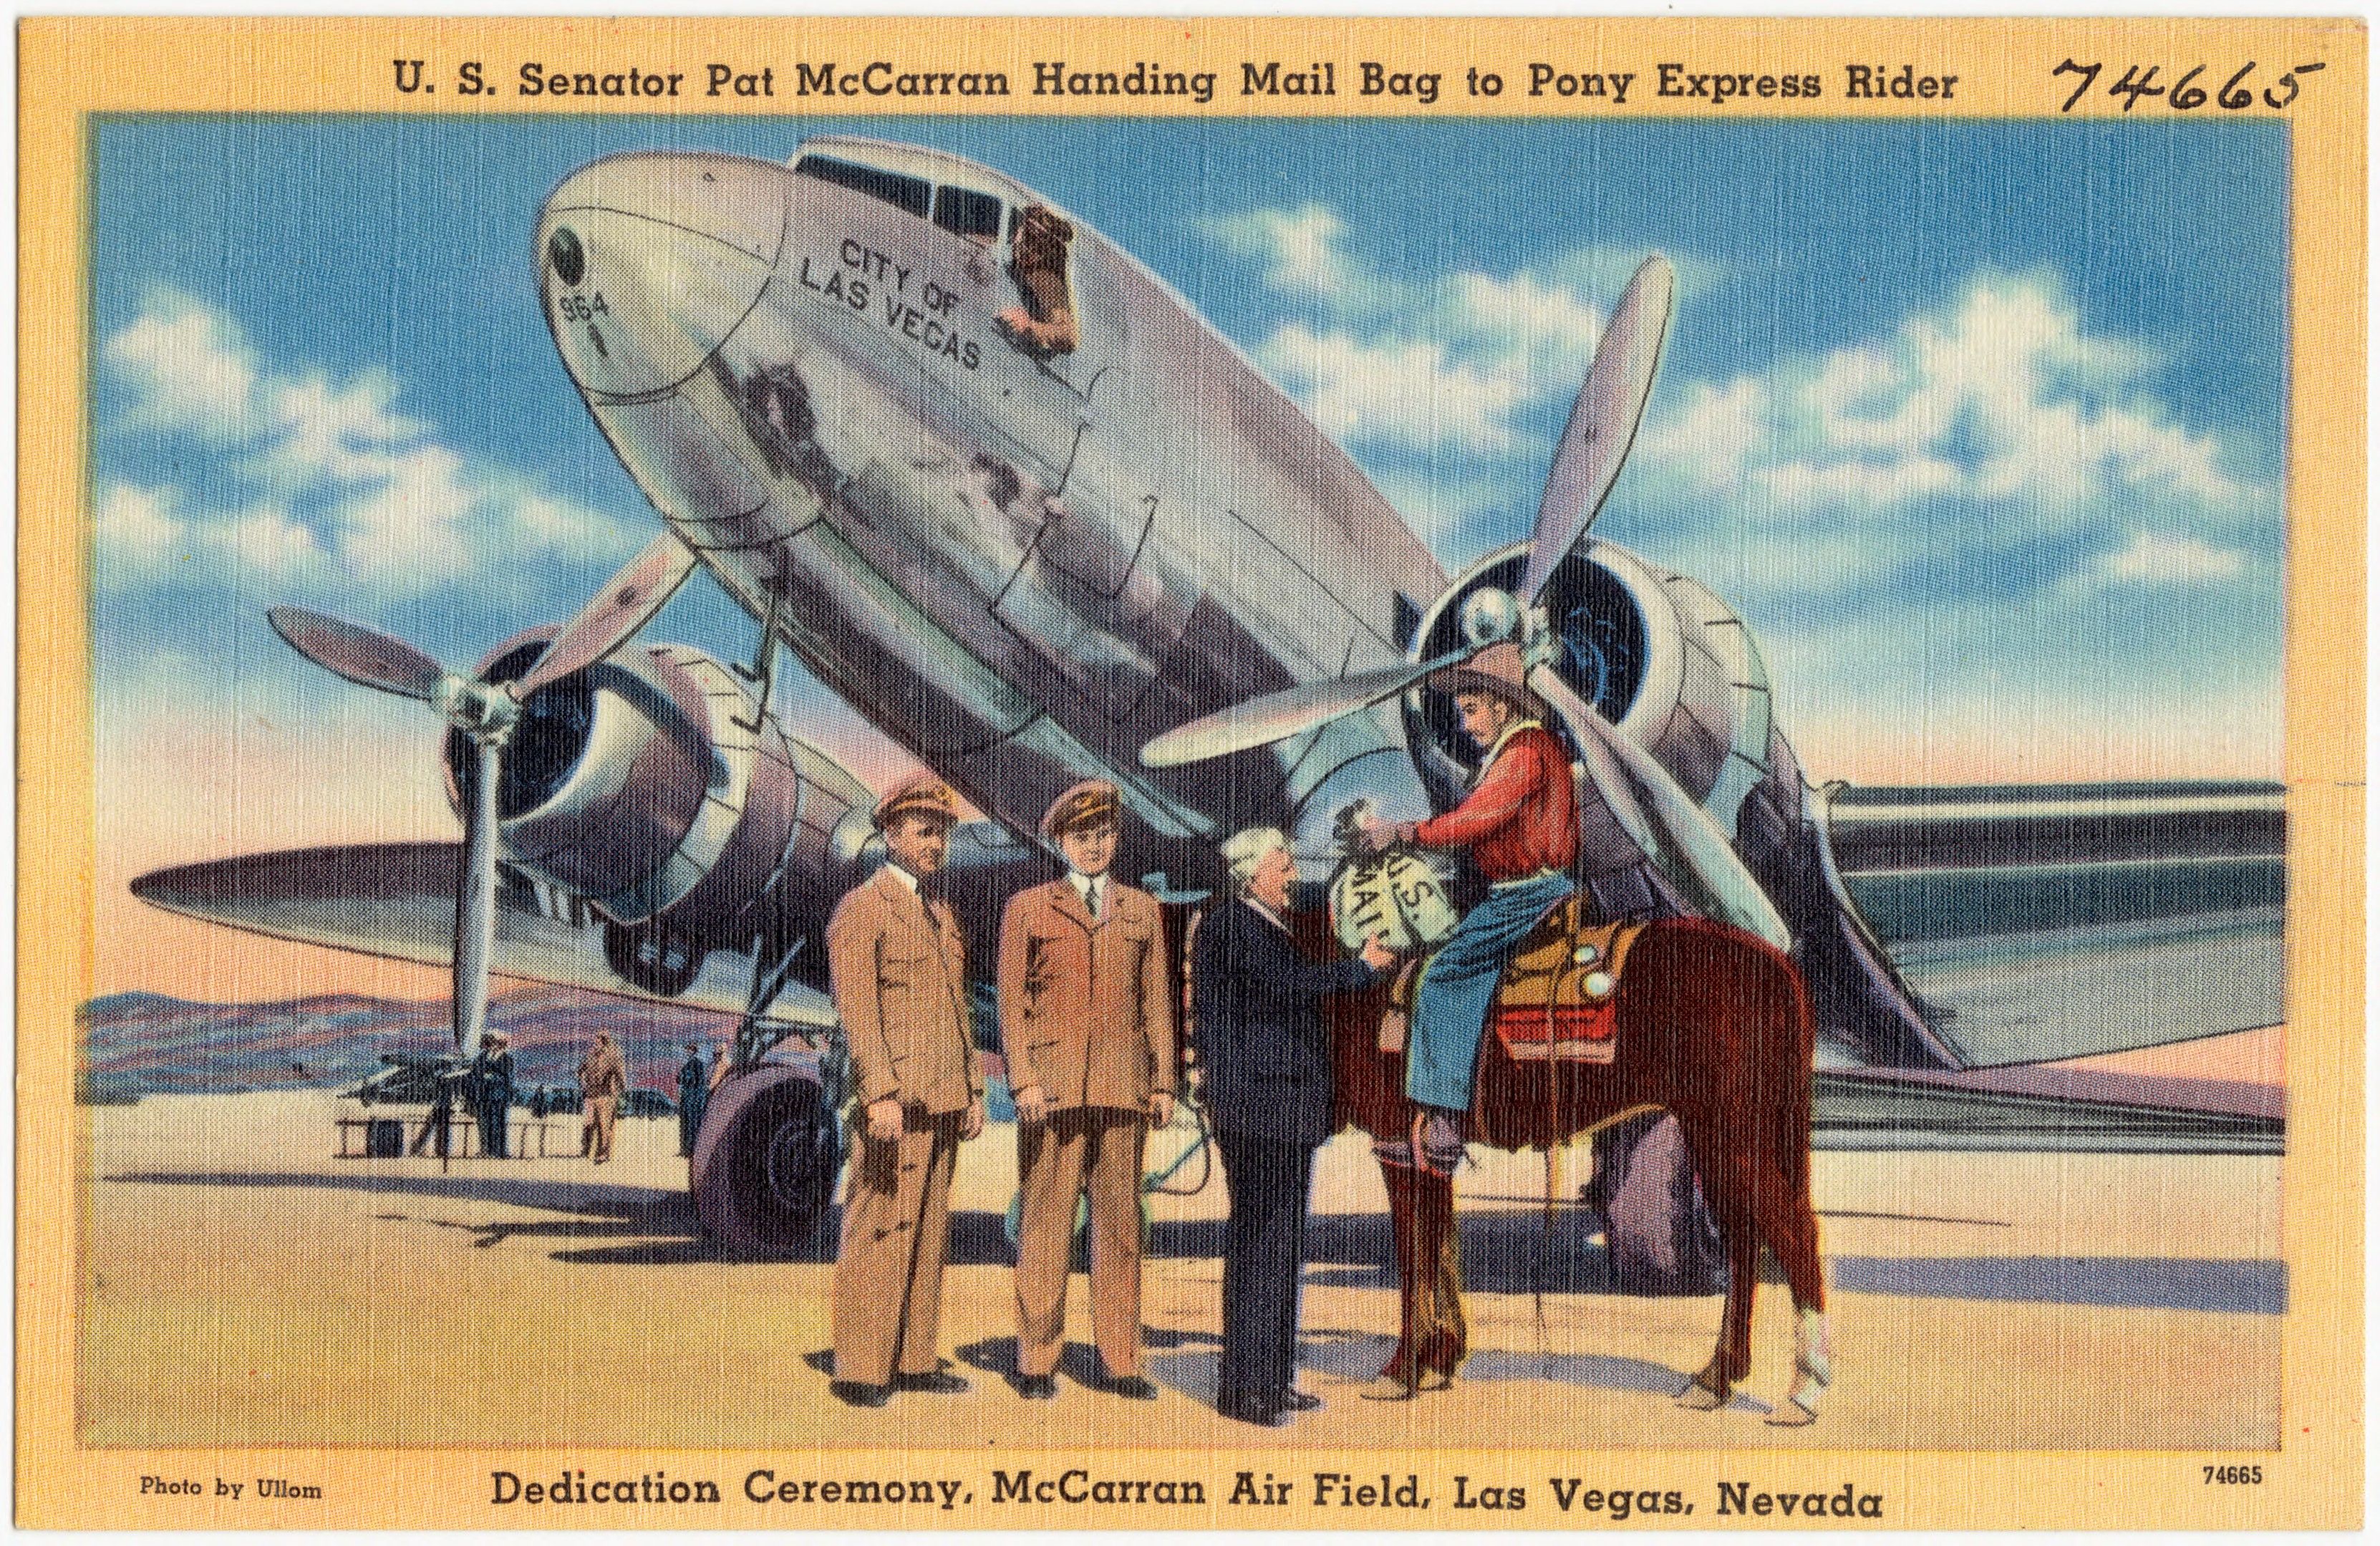 U.S._Senator_Pat_McCarran_handing_mail_bag_to_Pony_Express_rider,_Dedication_Ceremony,_McCarran_Air_Field,_Las_Vegas,_Nevada_(74665)